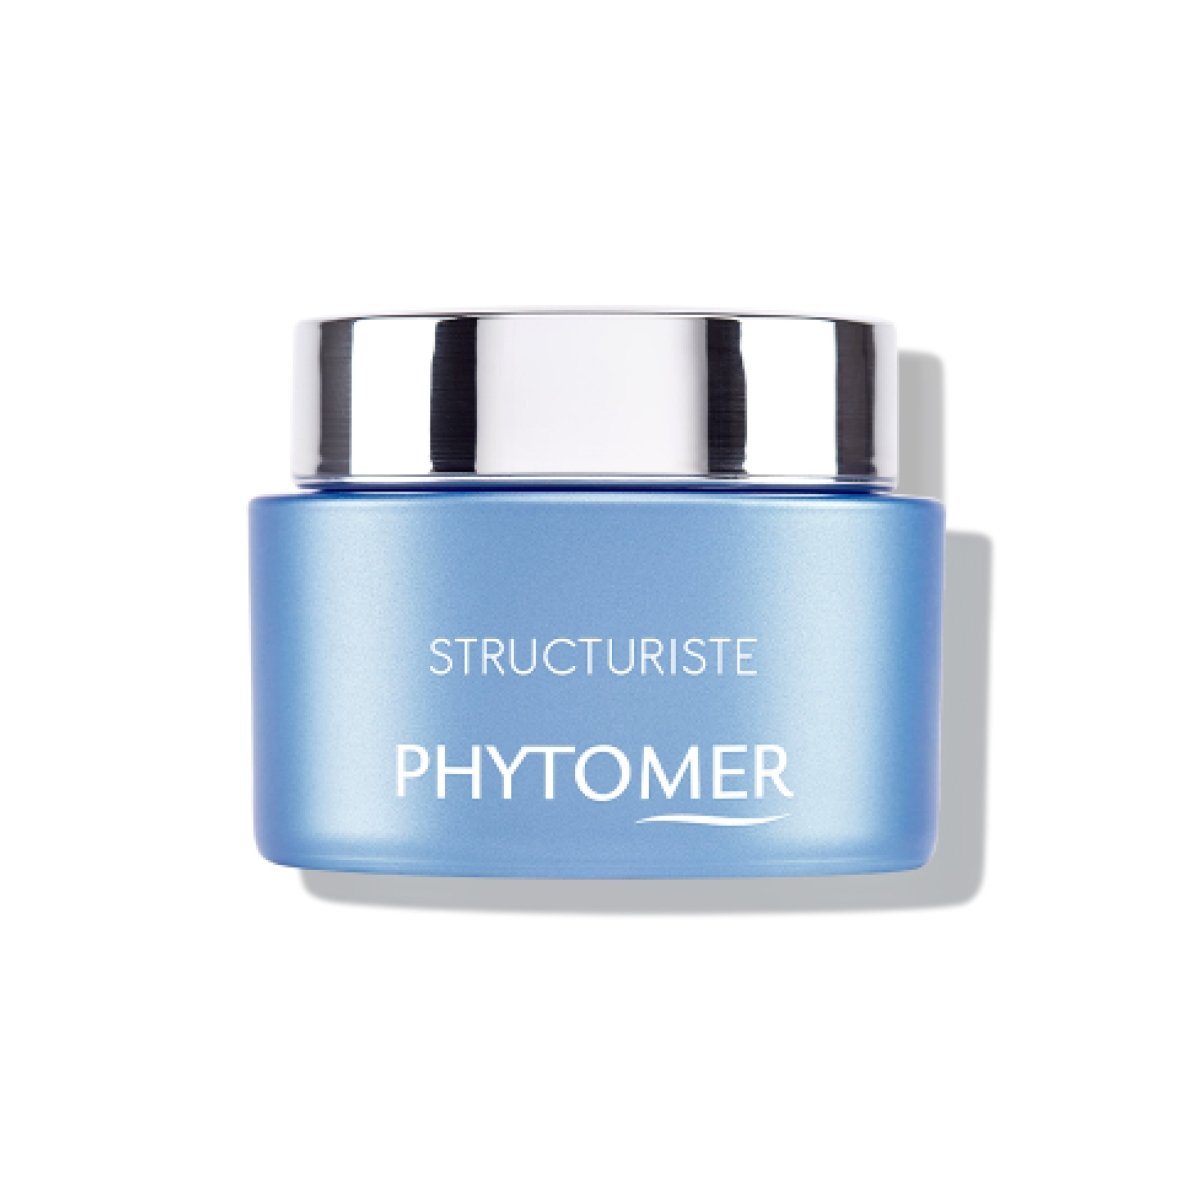 Phytomer - STRUCTURISTE FIRMING LIFT CREAM 50ML - SkincareEssentials